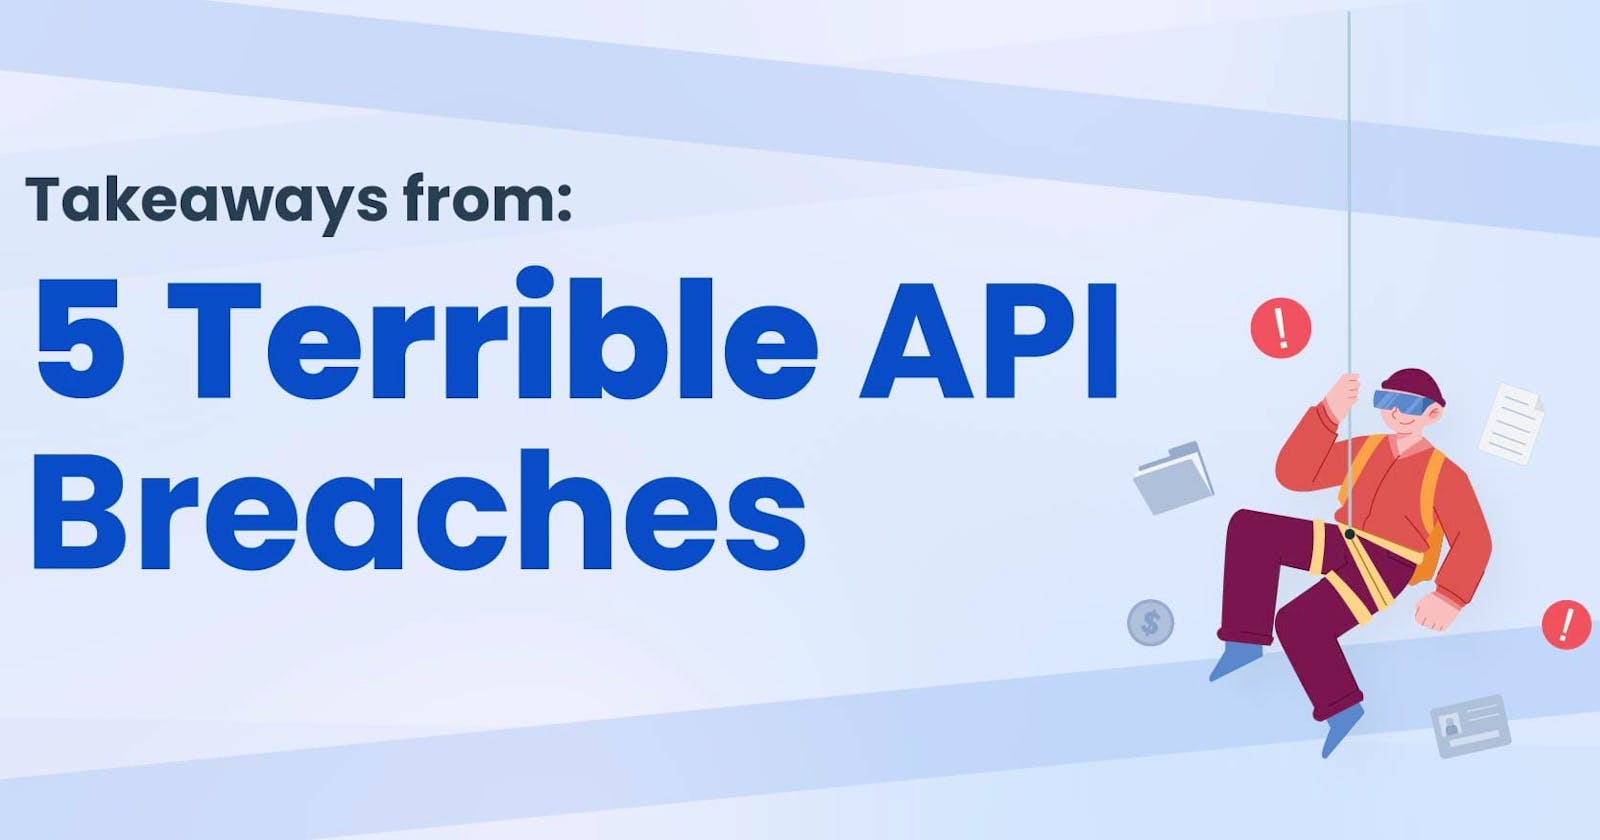 Takeaways From 5 Terrible API Breaches